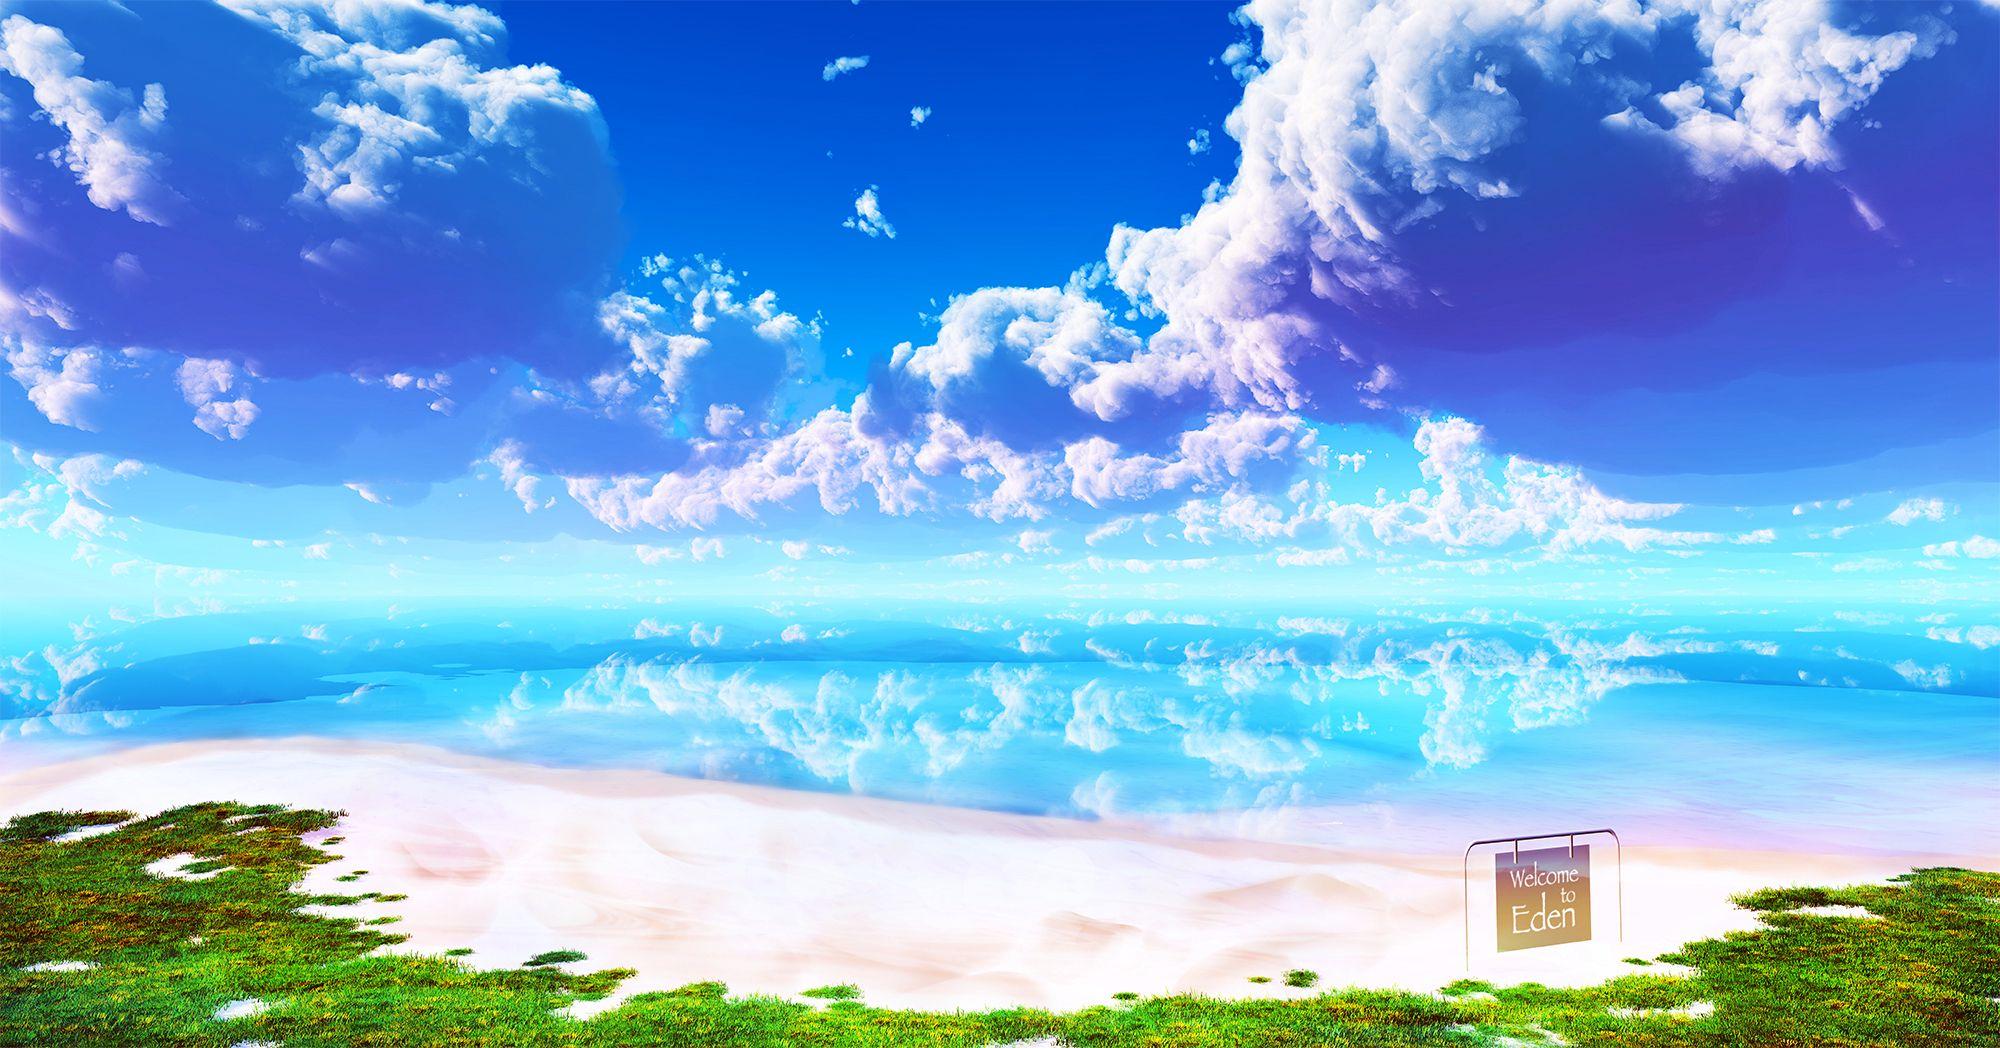 date a live anime beach wallpaper